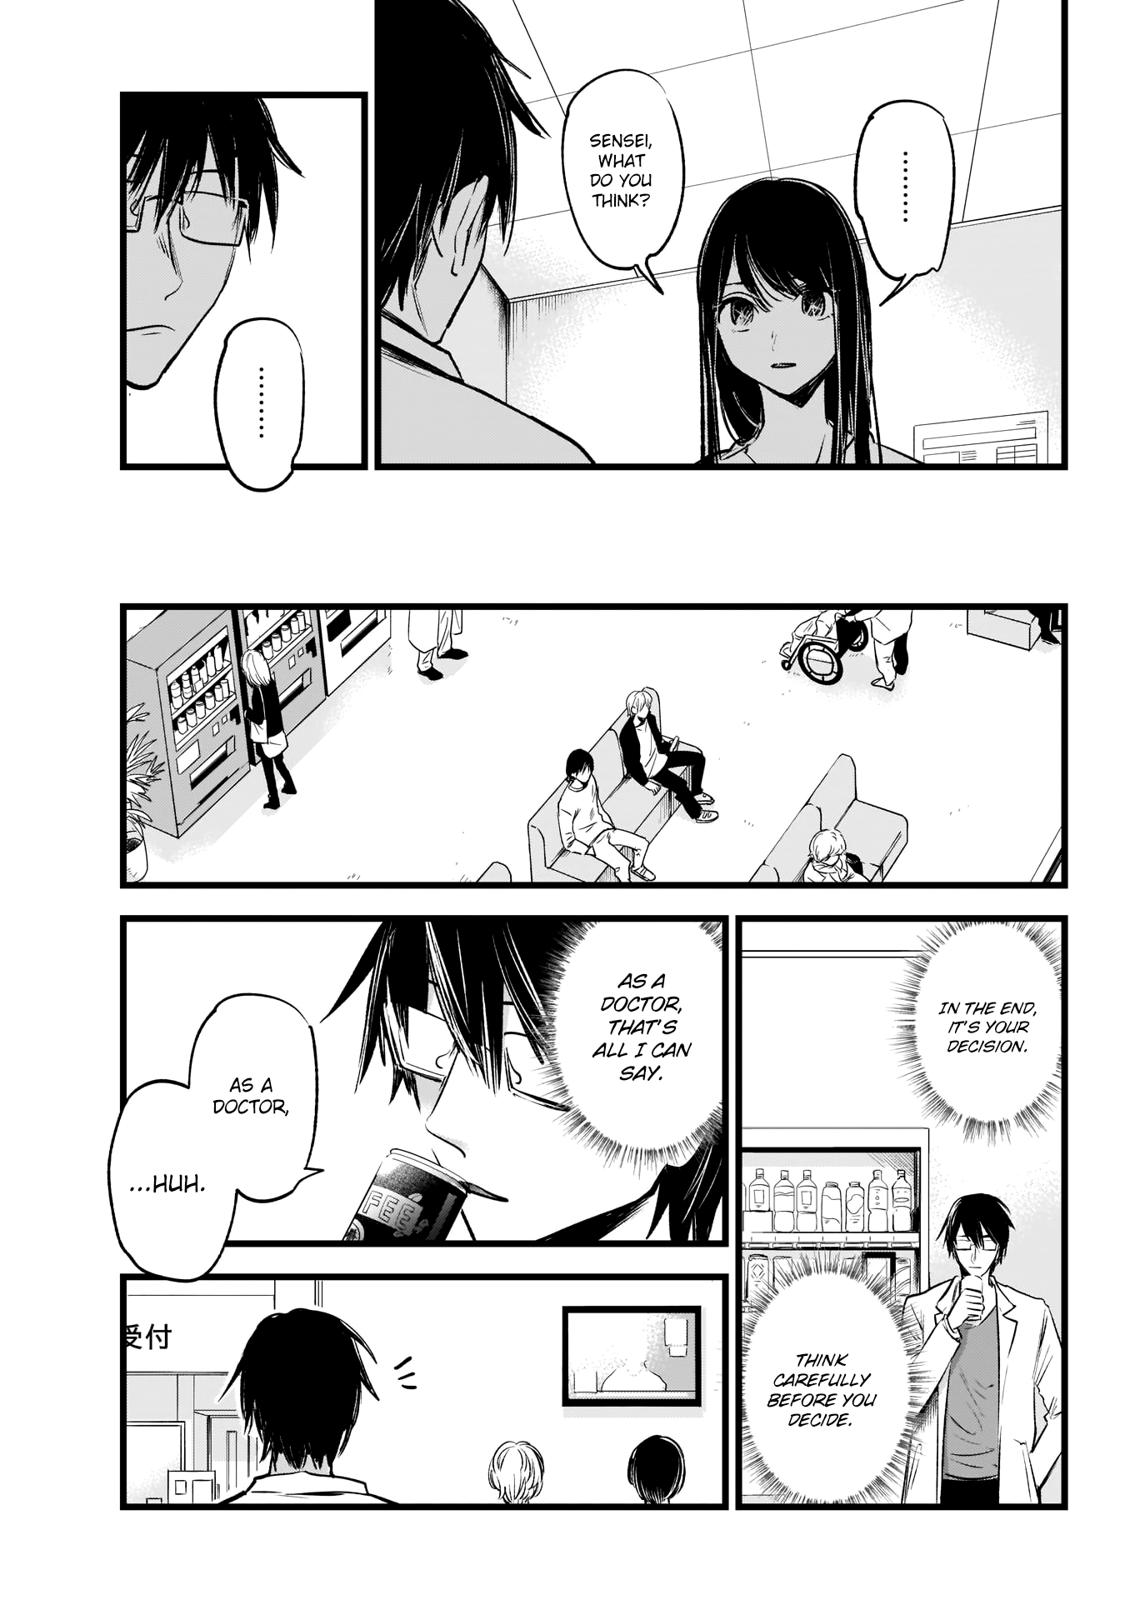 Oshi No Ko Manga Manga Chapter - 1 - image 21